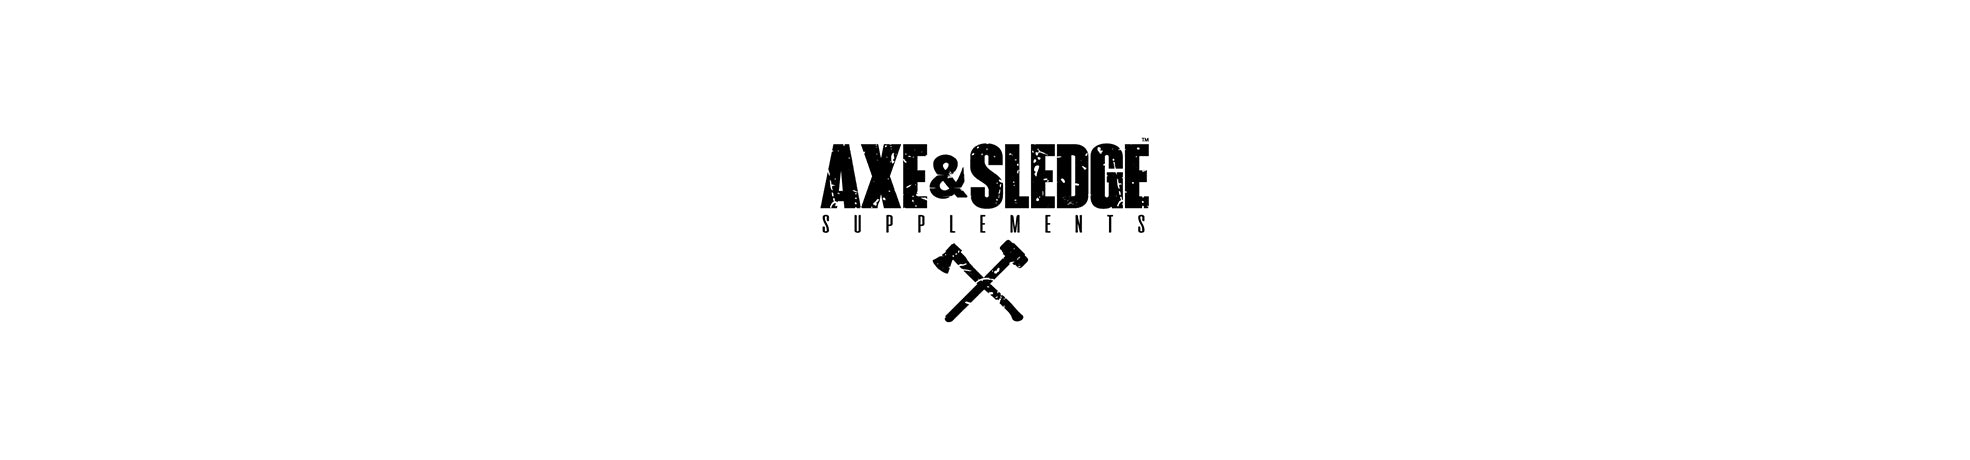 Axe & Sledge Supplements